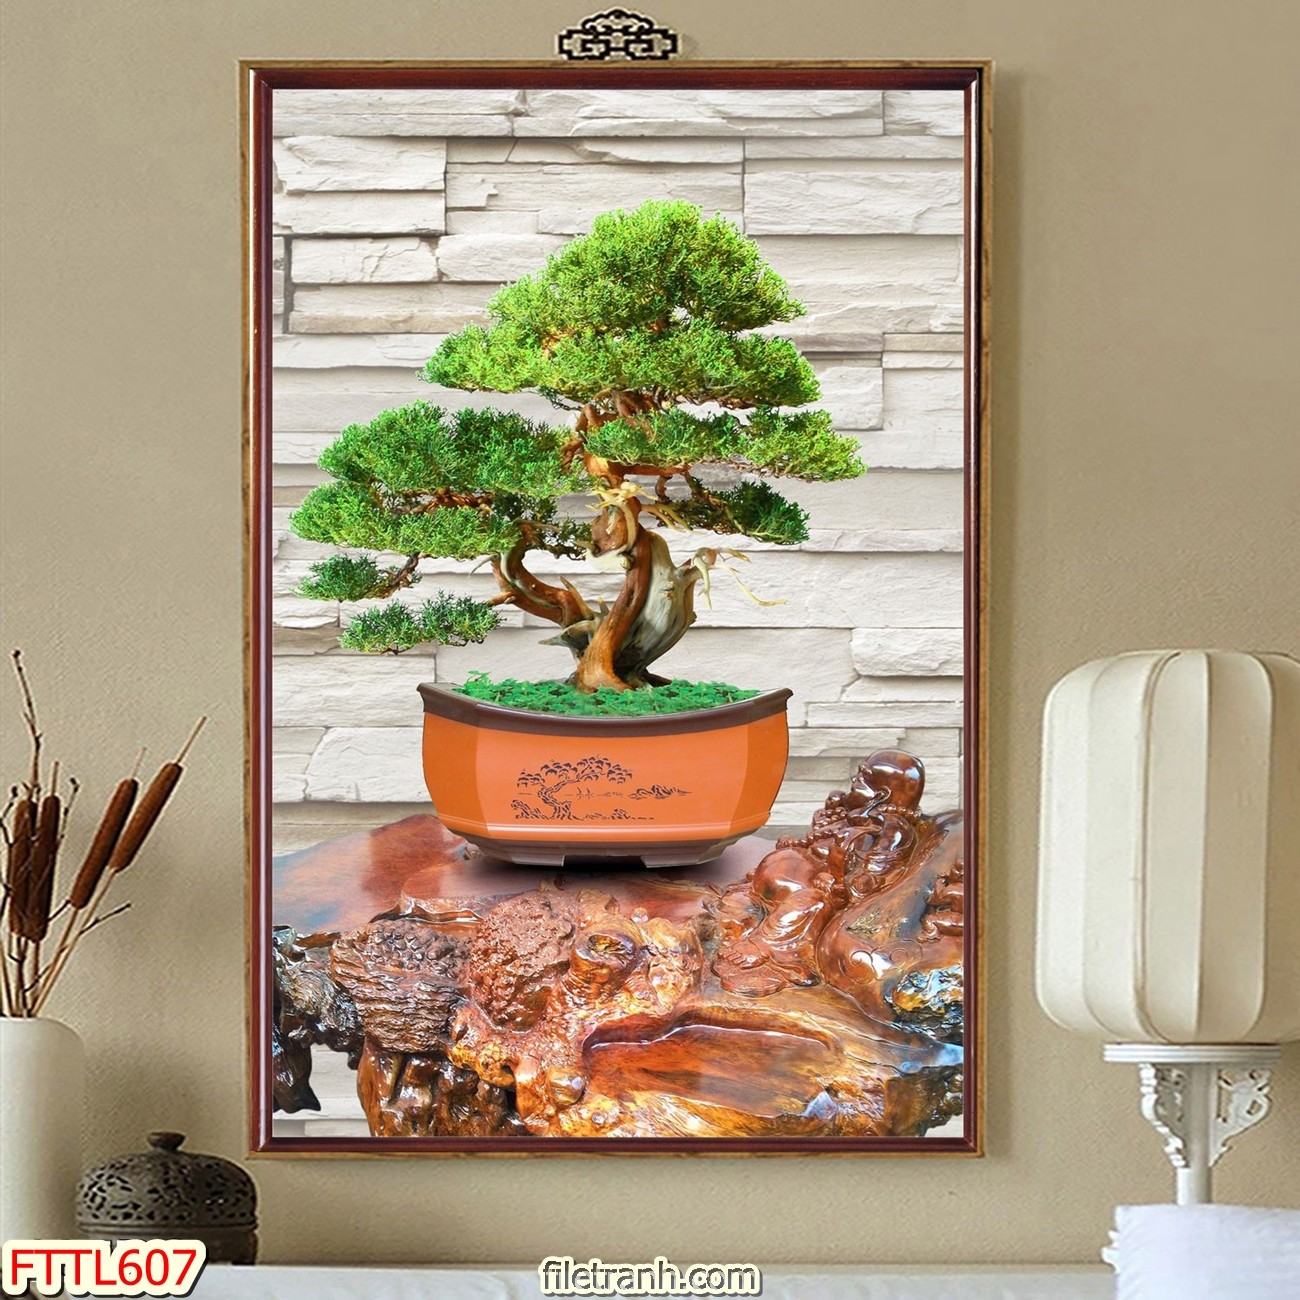 https://filetranh.com/file-tranh-chau-mai-bonsai/file-tranh-chau-mai-bonsai-fttl607.html